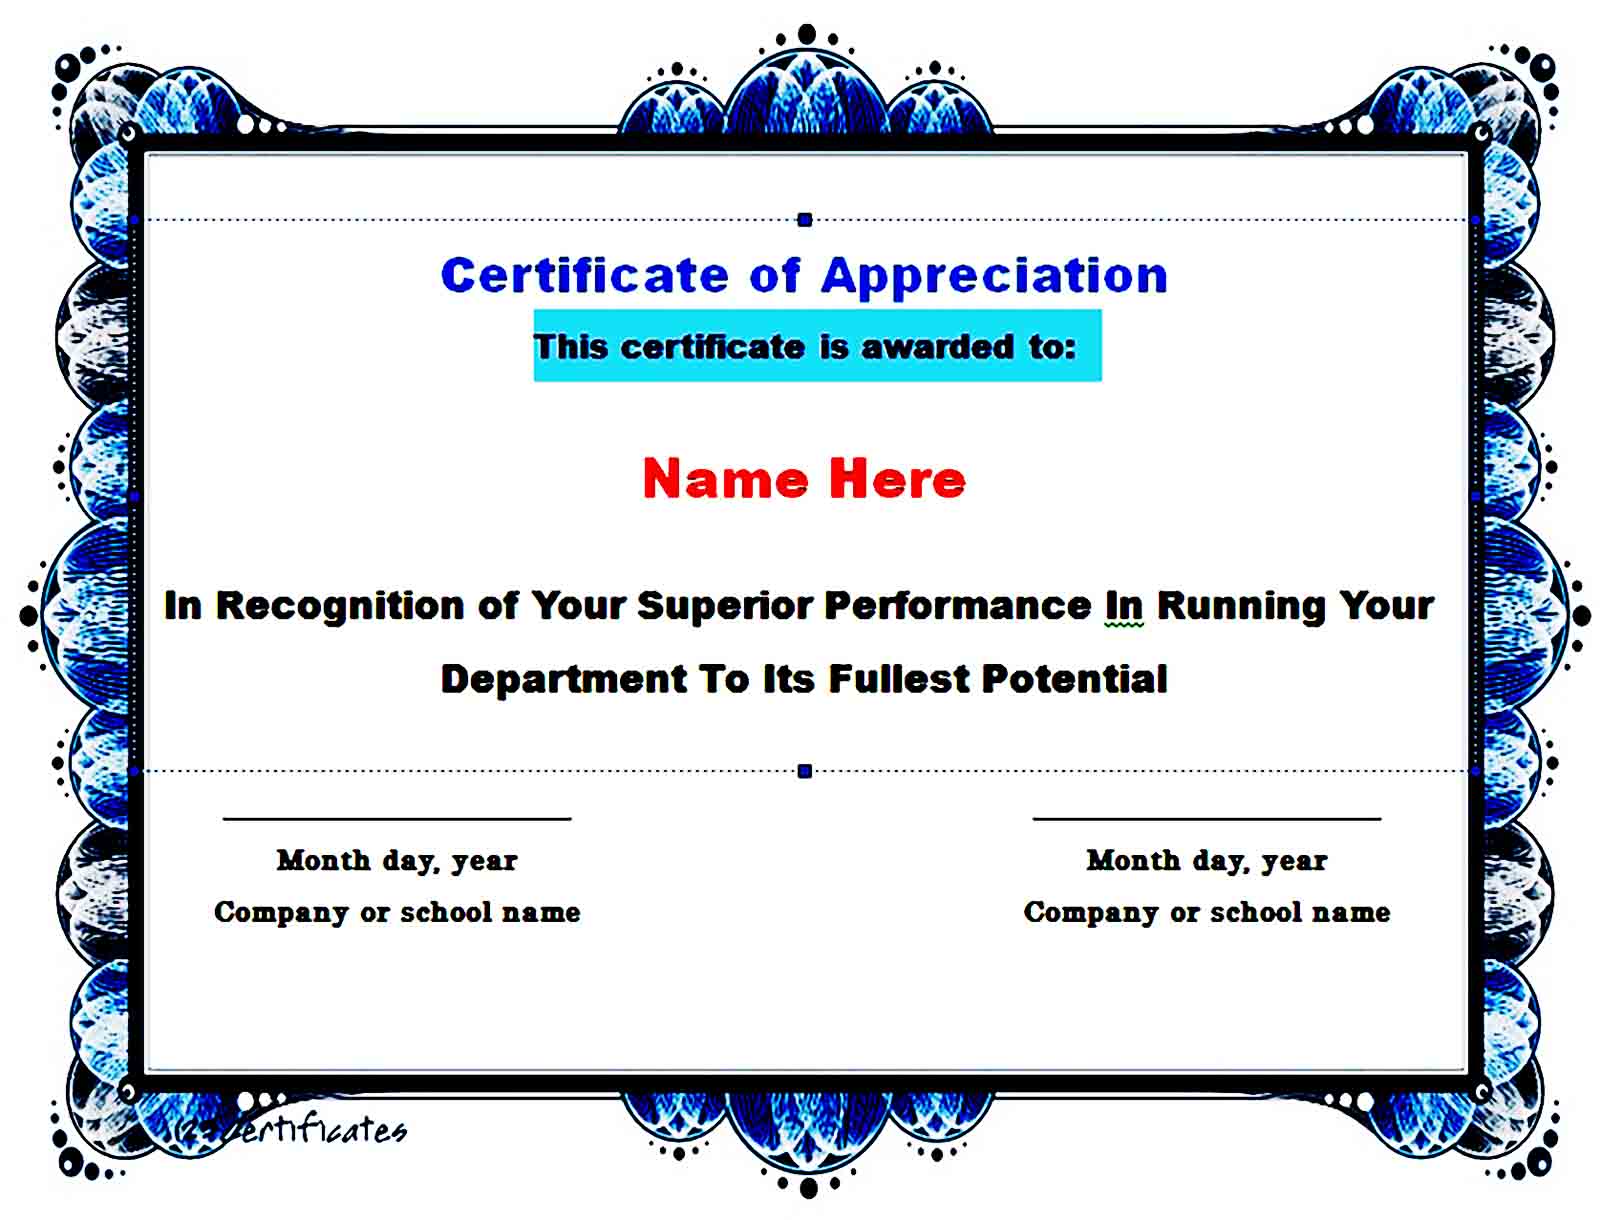 Certificate of Appreciation 15